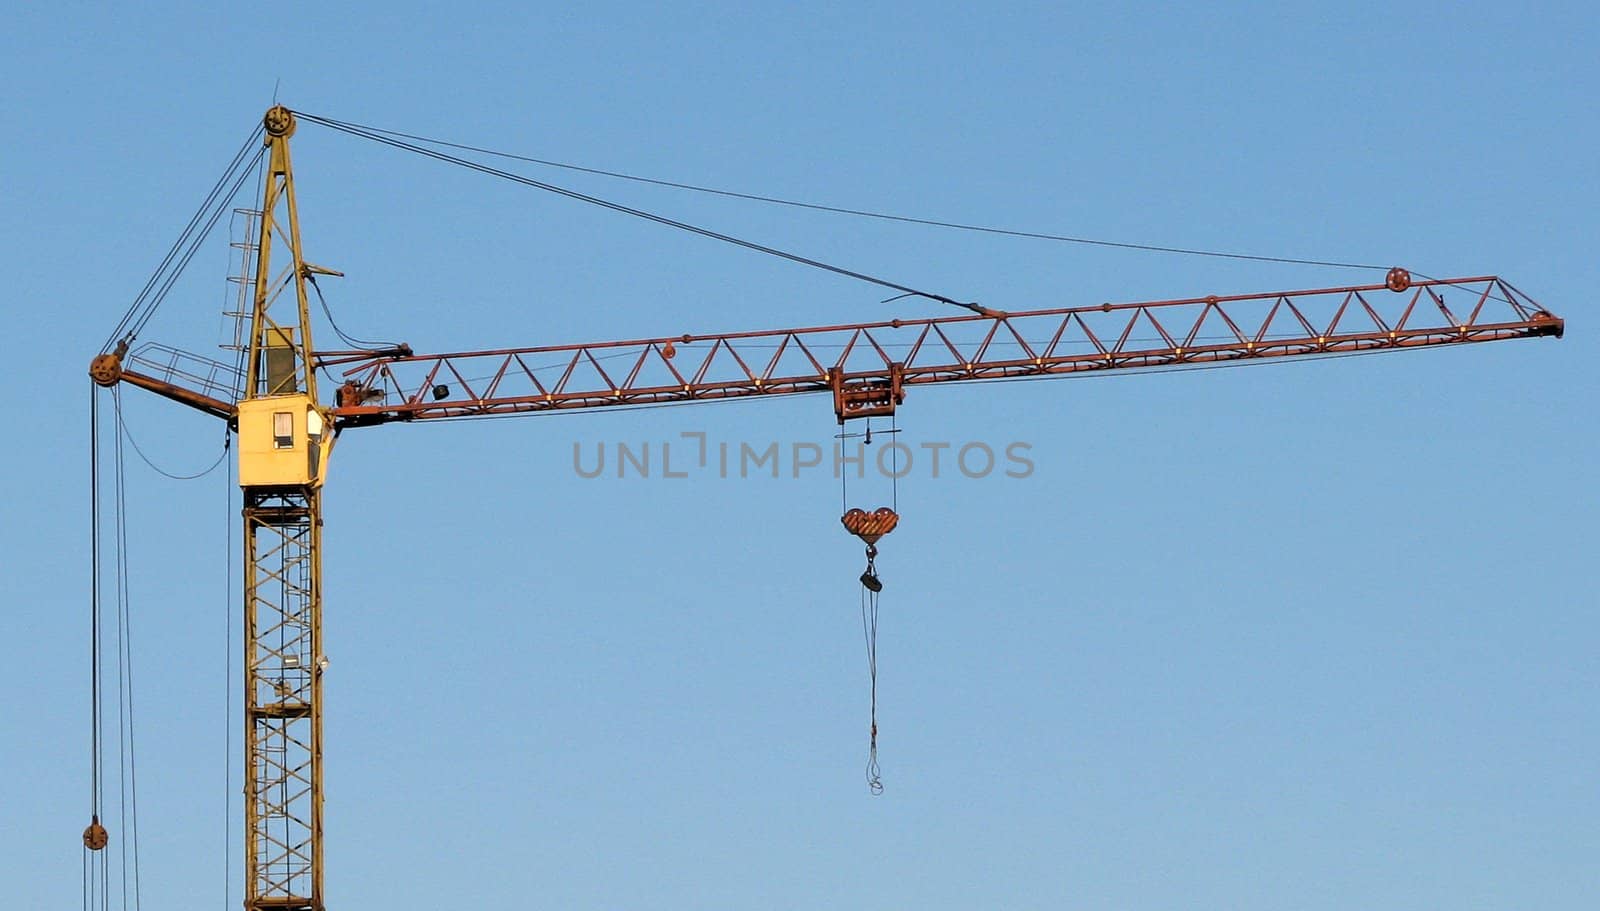 the hoisting crane on the blue sky background